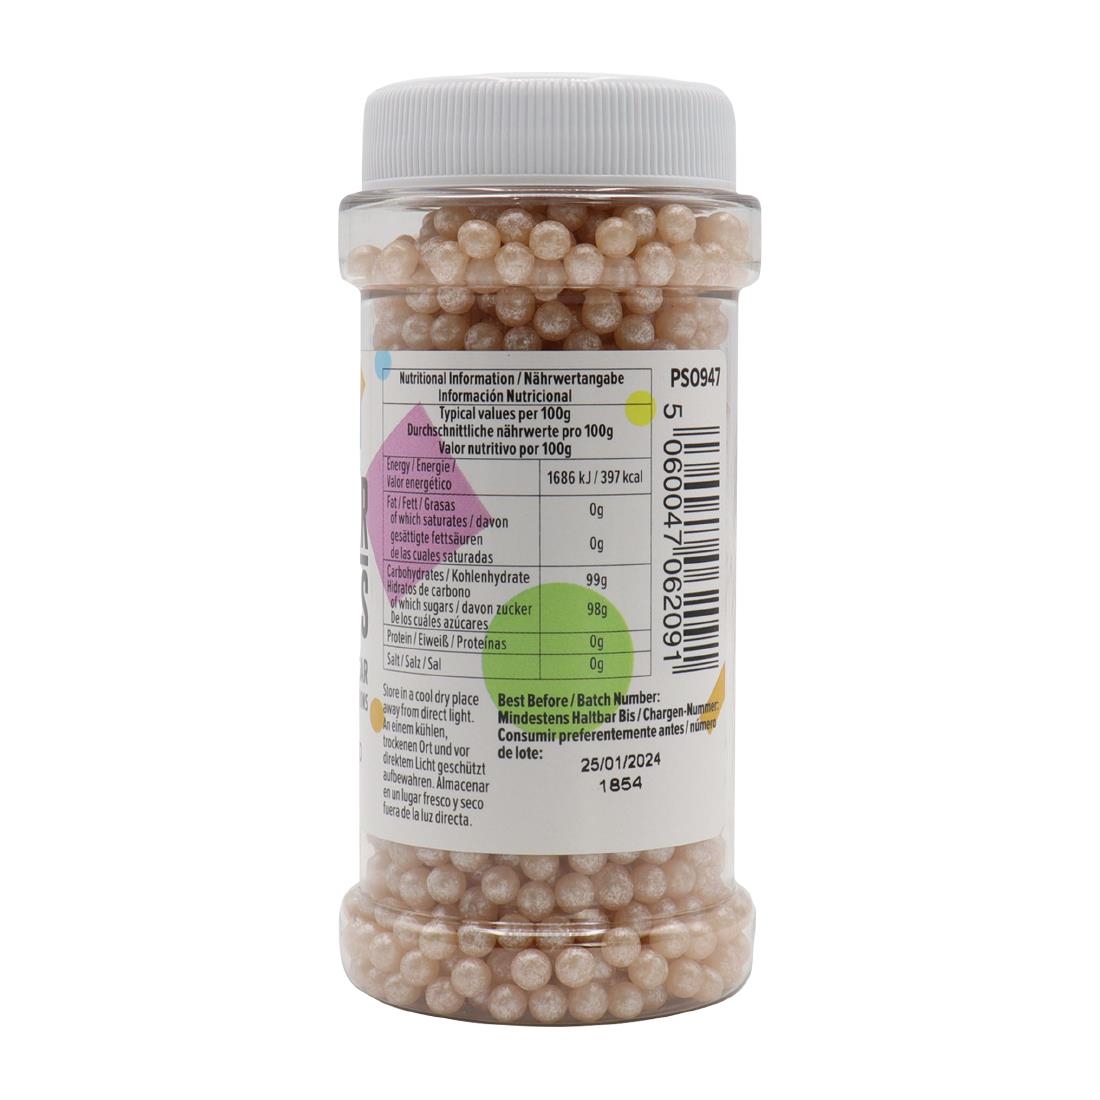 PME Sugar Pearls 100g - Pearlised Oyster (HU219)